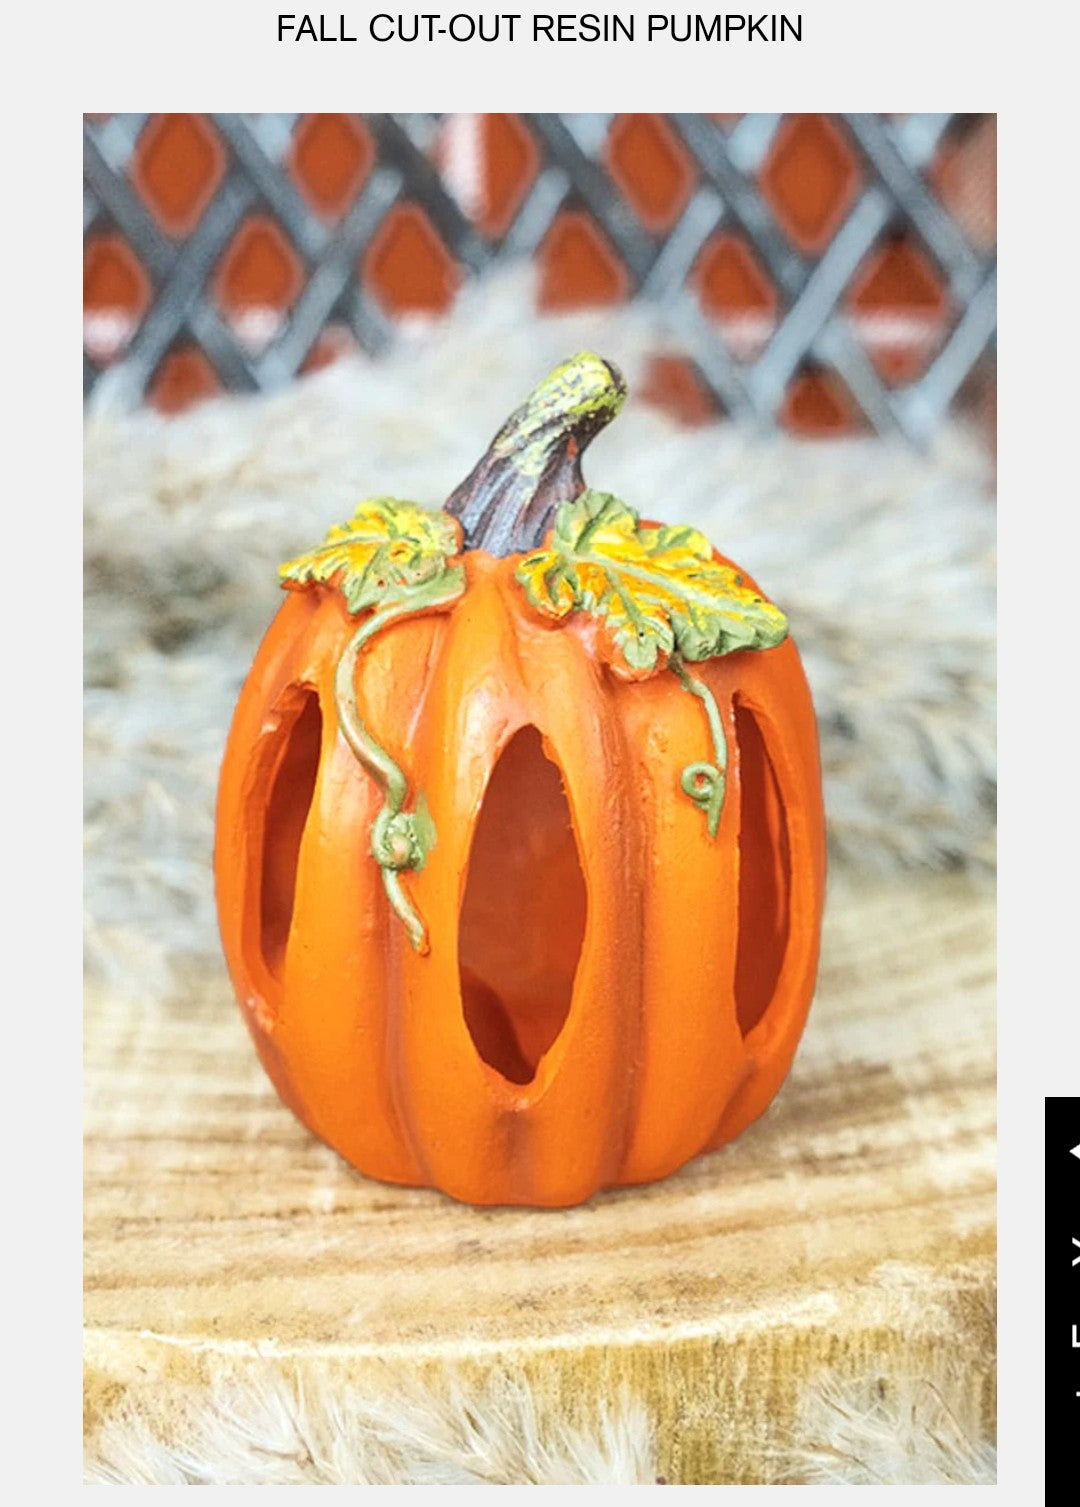 Fall cut out resin pumpkin